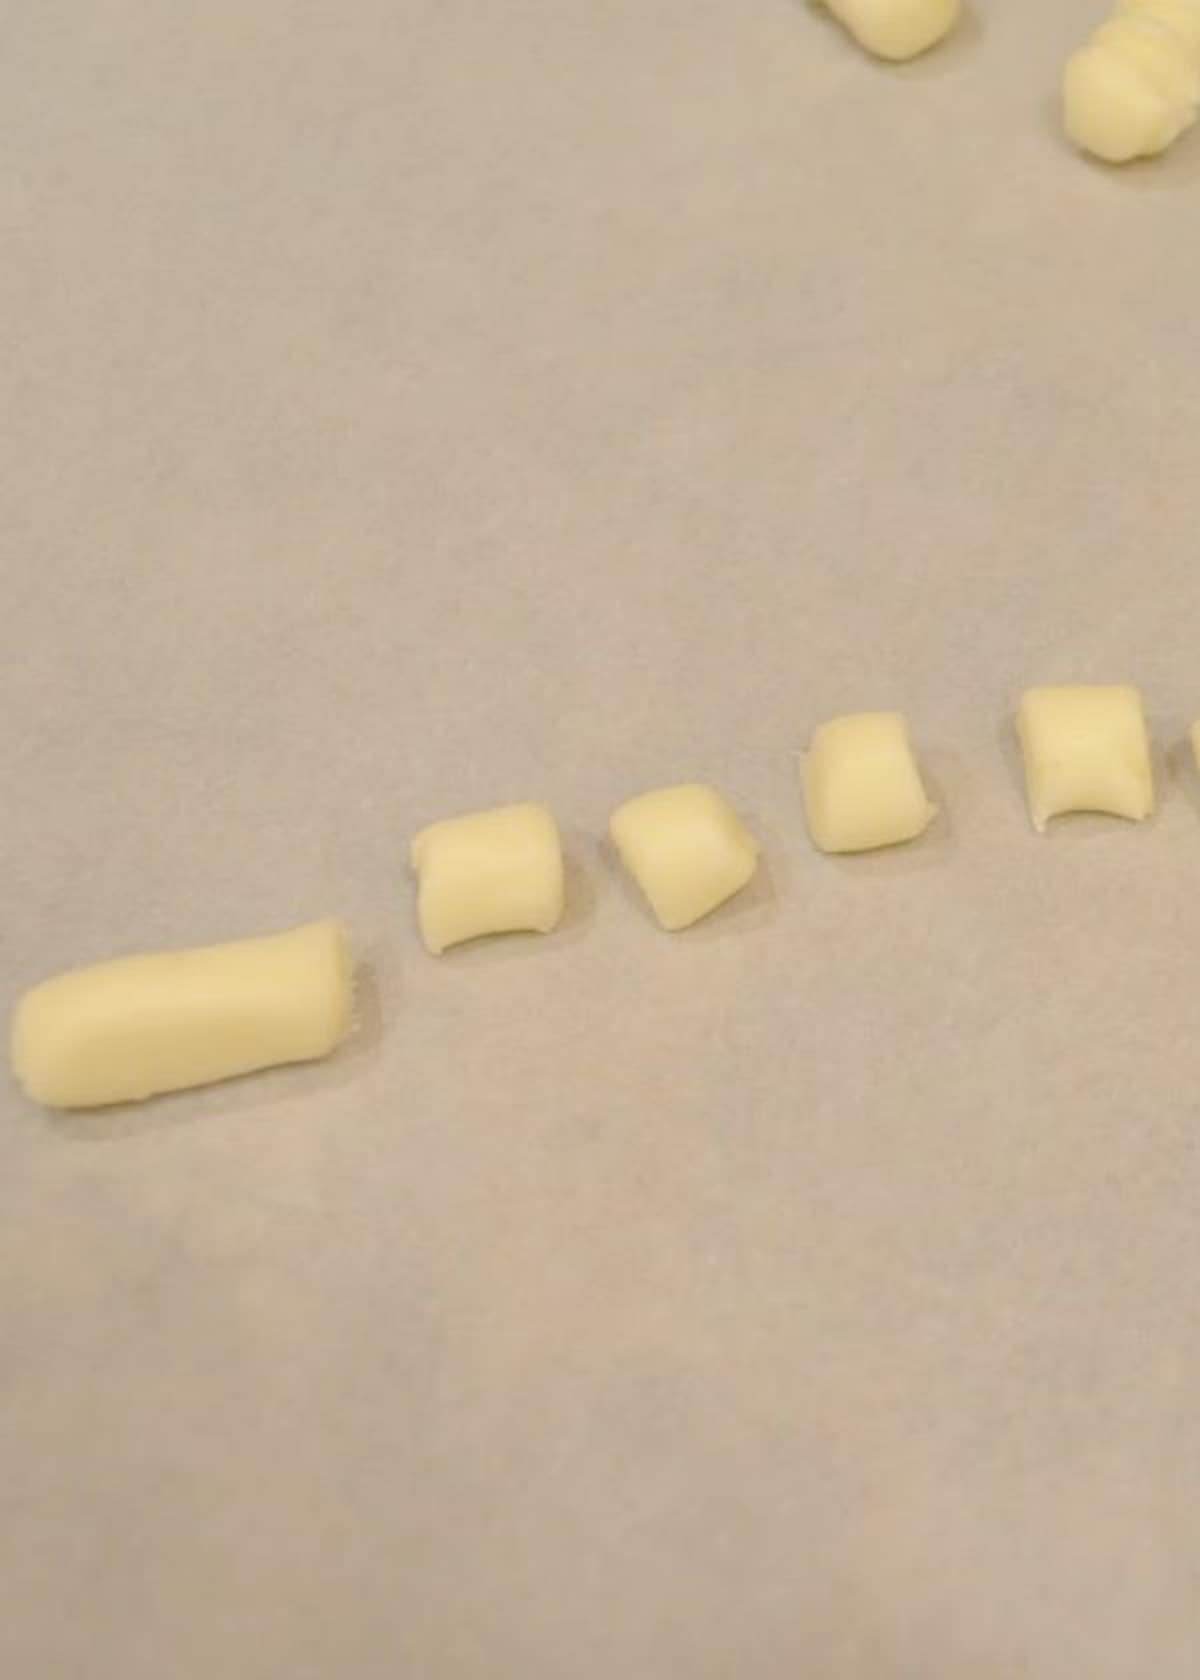 Sliced Buttermints on a piece of parchment paper.